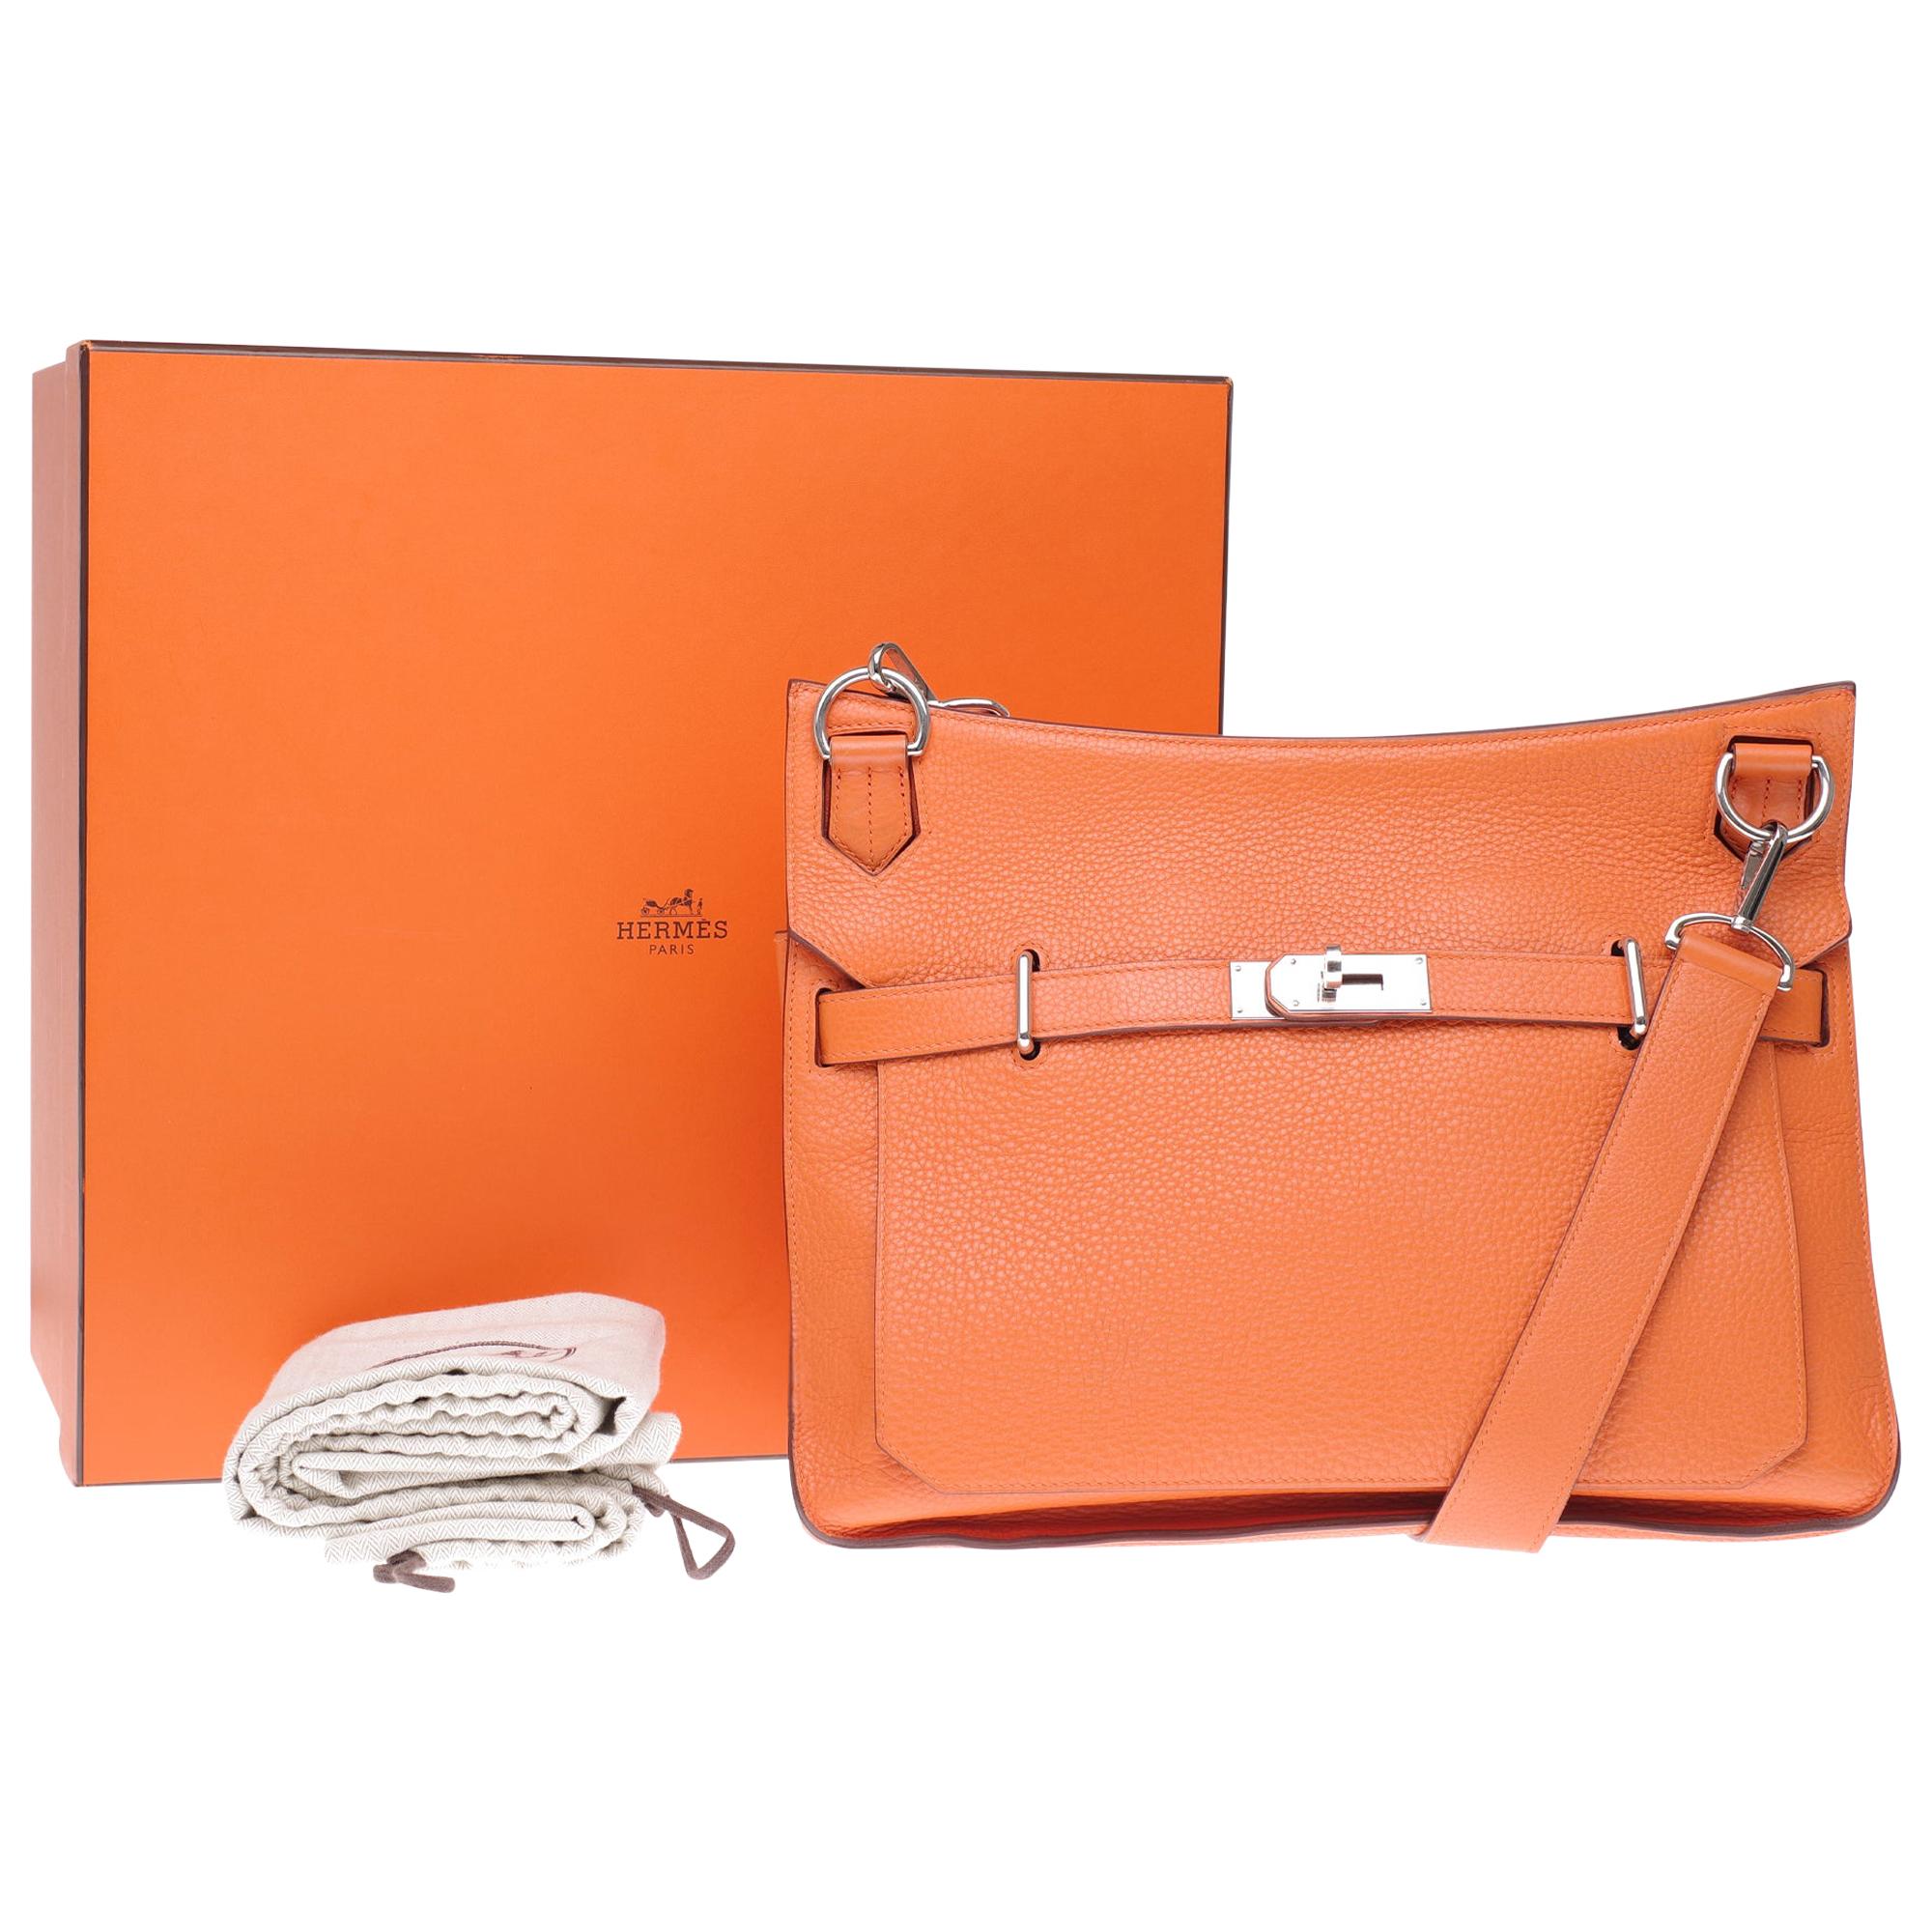 Hermès Jypsière crossbody bag in orange togo leather with Palladium hardware